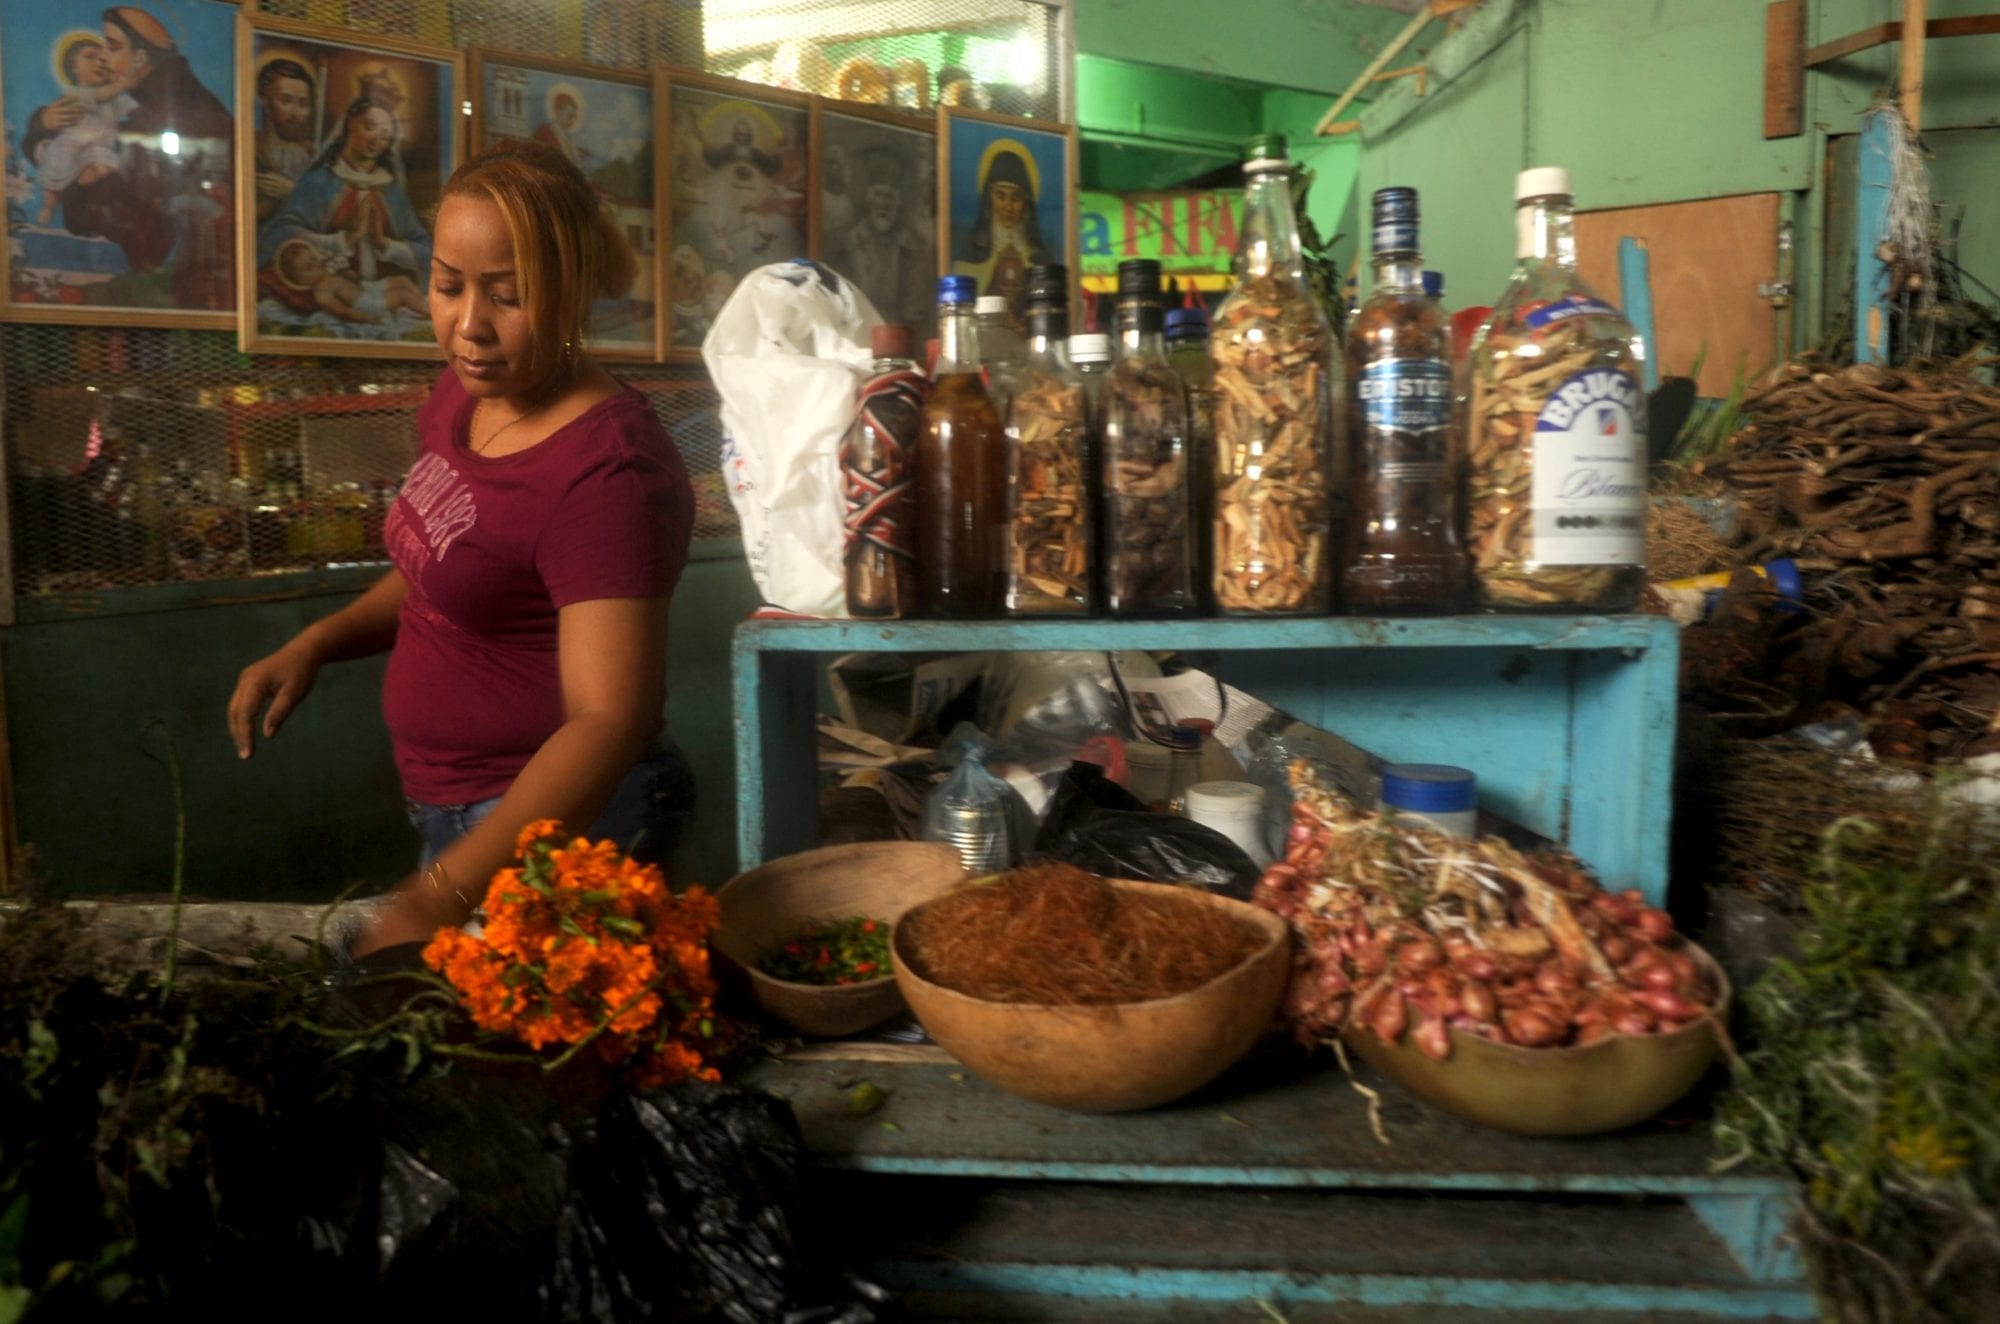 Dominican Republic, informal economy, Solidarity Center